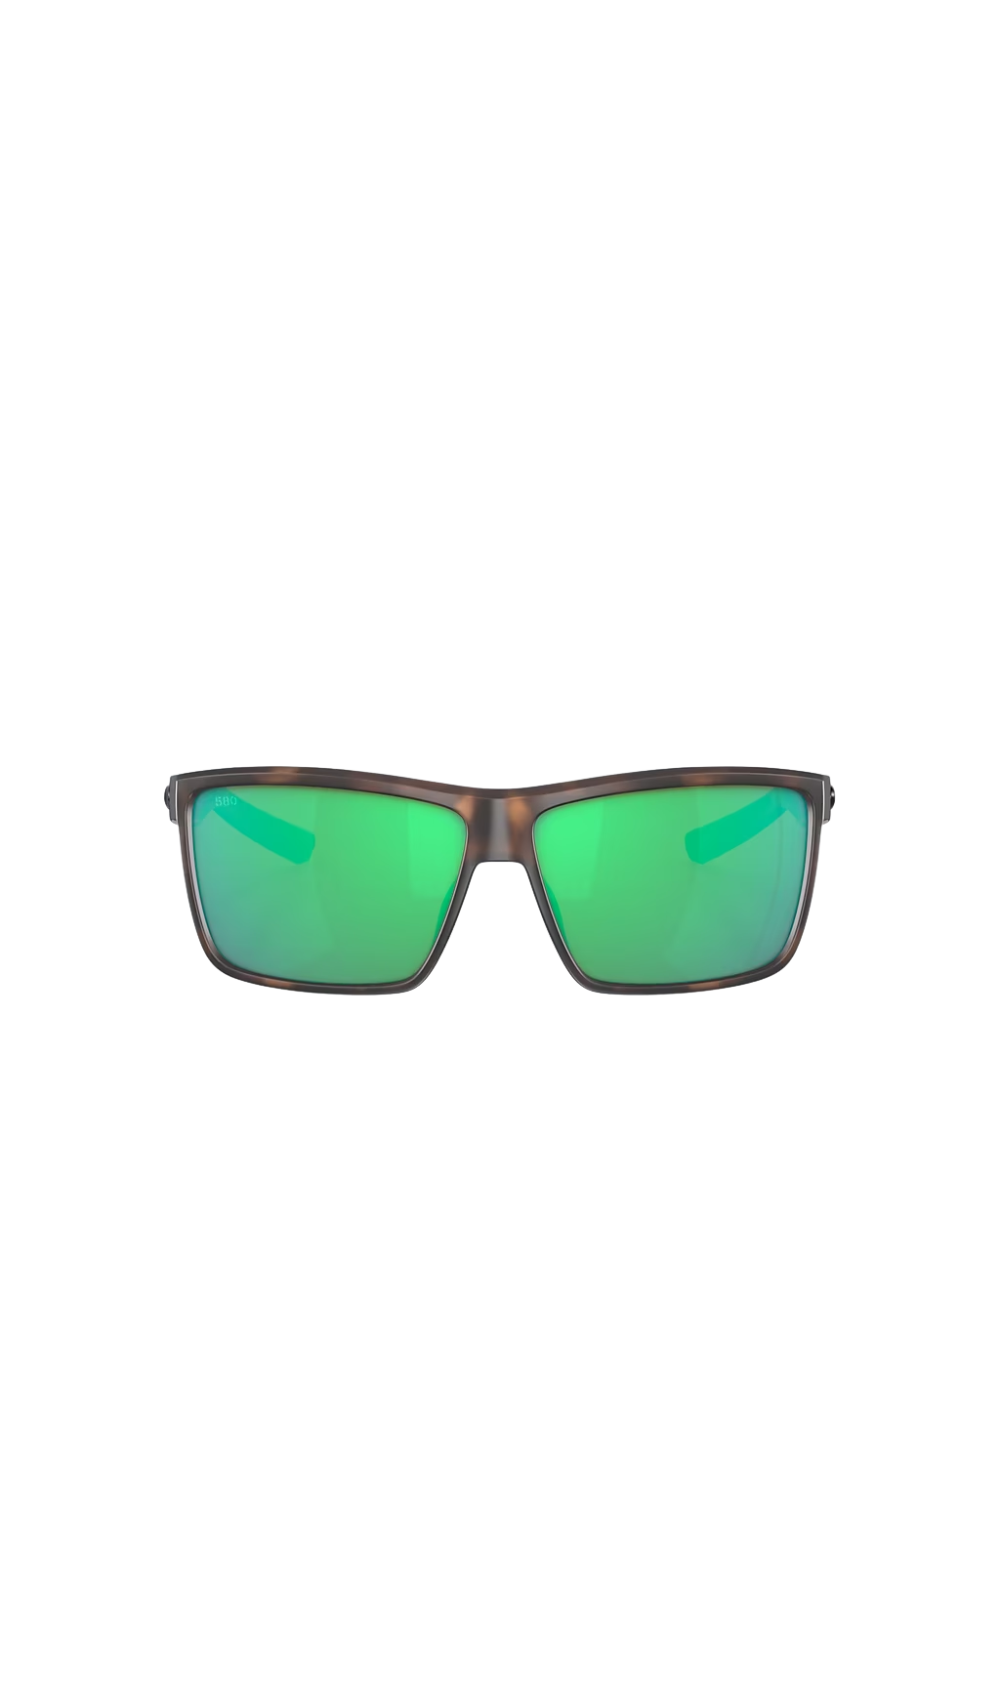 Costa Sunglasses Rinconcito Matte Tortoise Frame - Green Mirror Lens